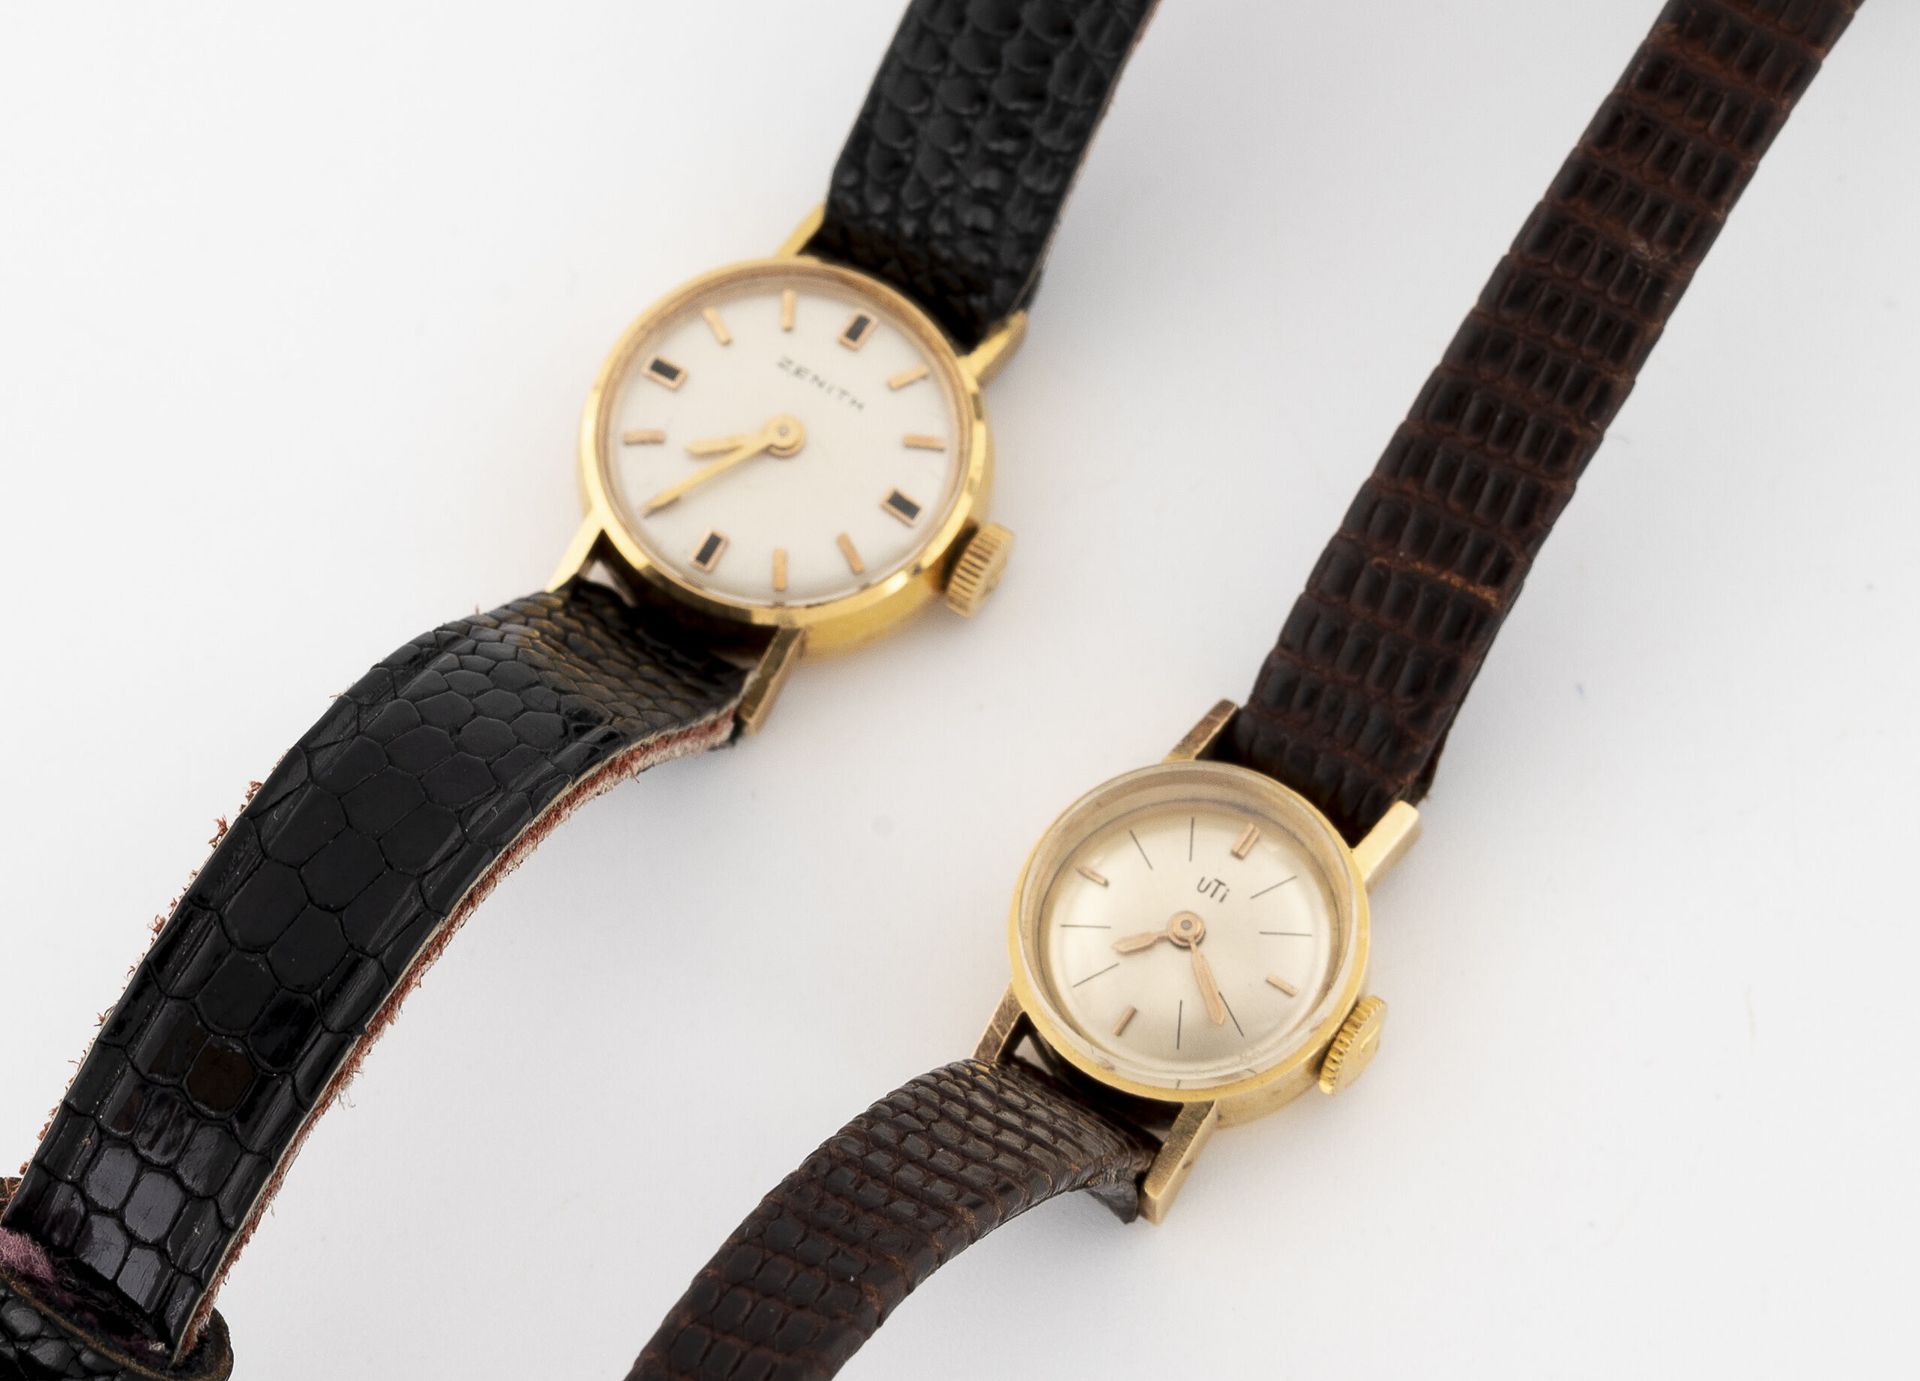 ZENITH & UTI 一套两块女式手表。

黄金（750）圆形表壳。

表盘背面经缎面磨砂处理，签名为ZENITH ET UTI。

手动上链的机械机芯。
&hellip;